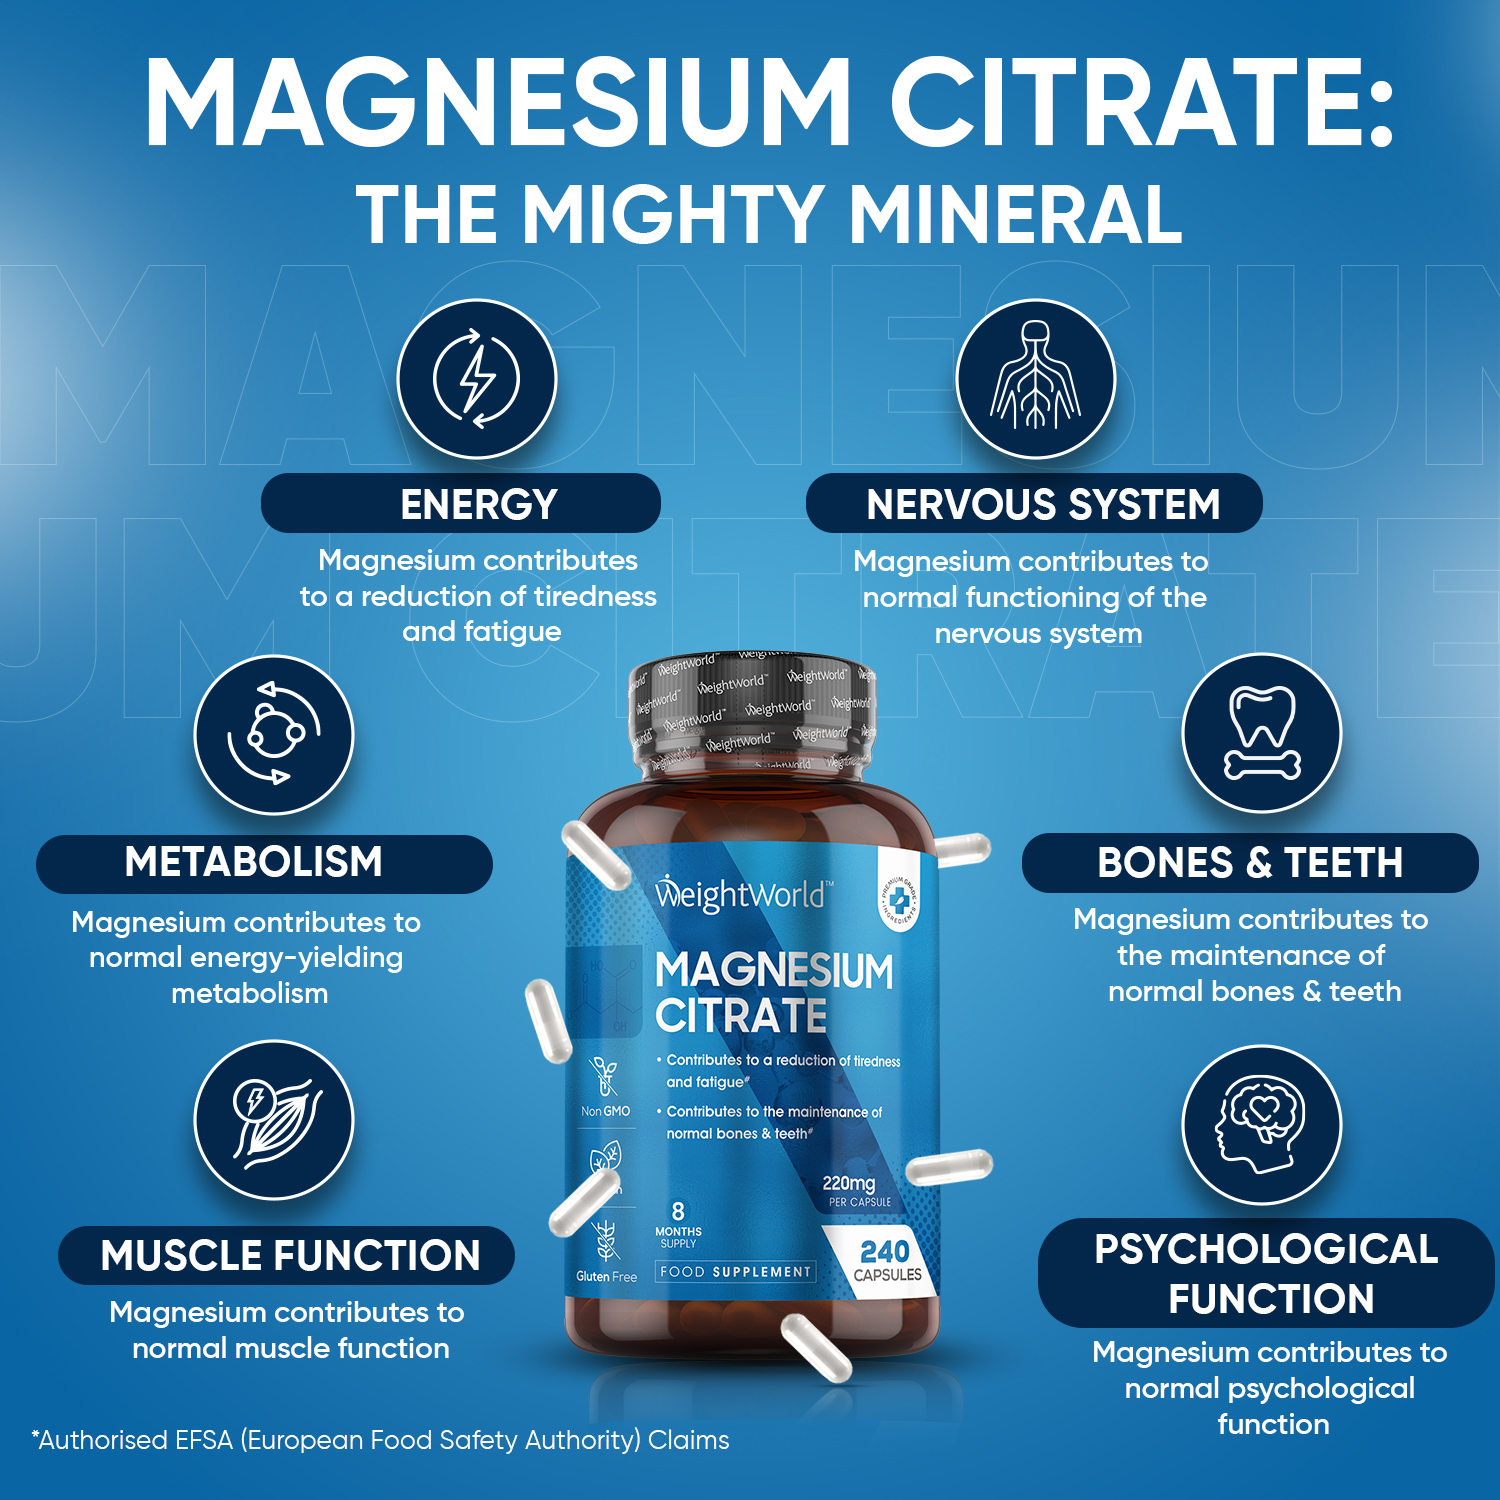 Magnesium Citrate Capsules from EarthBiotics - Health Benefits